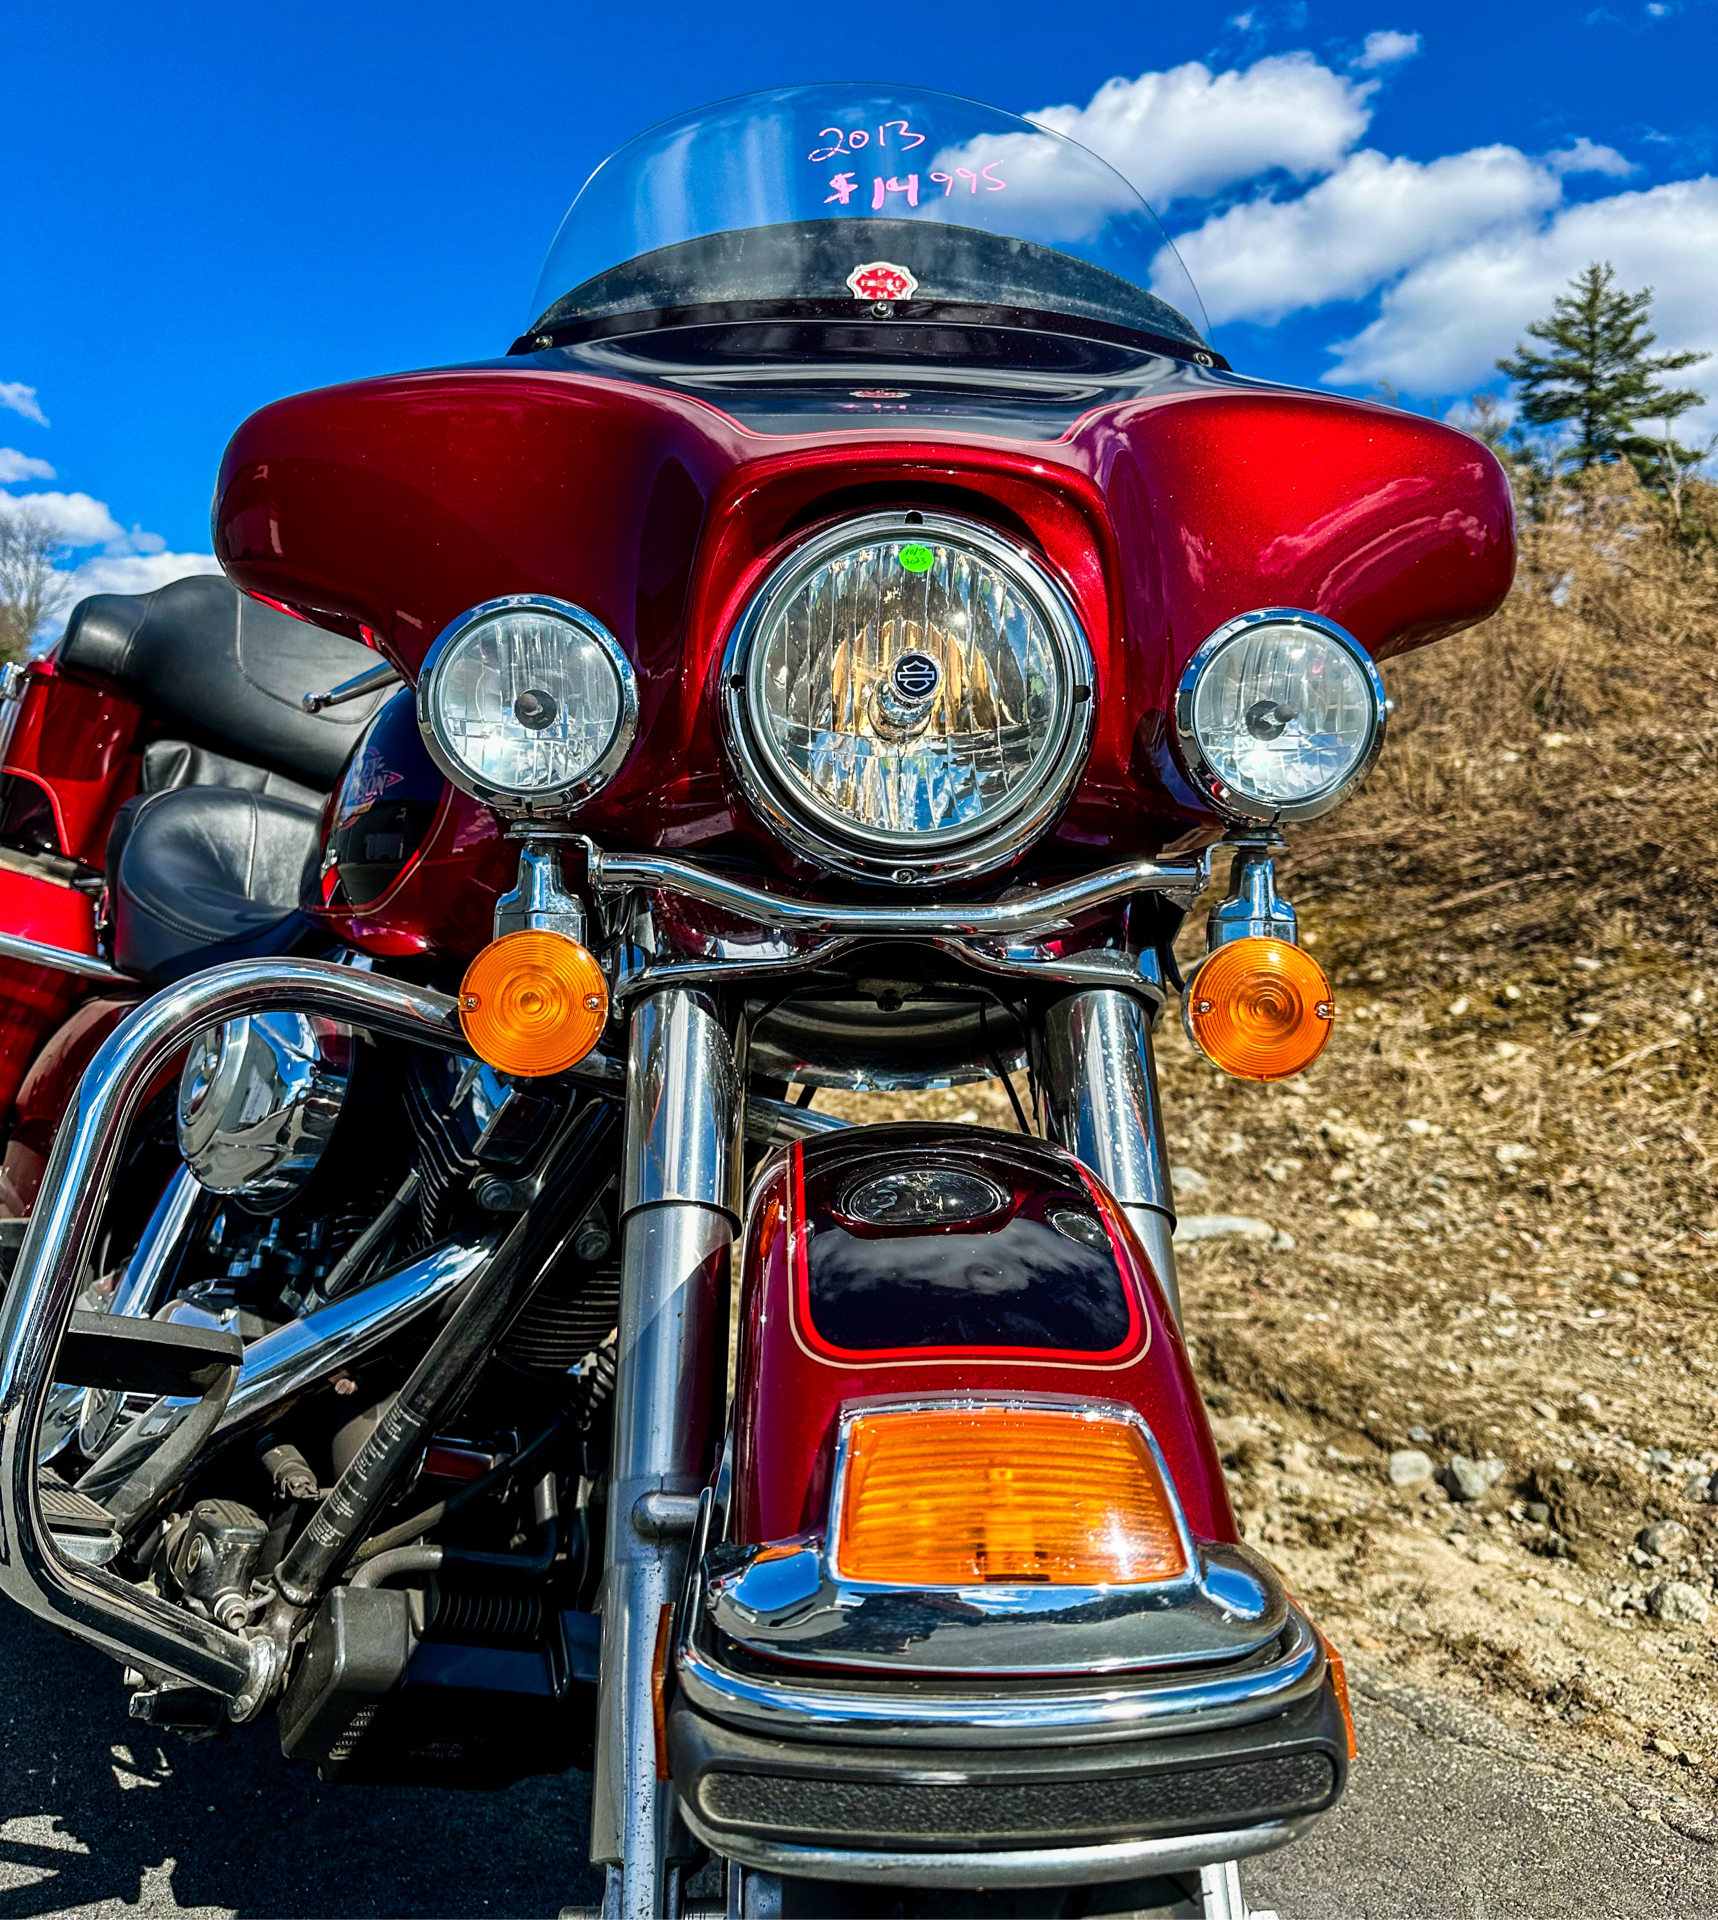 2013 Harley-Davidson Electra Glide® Classic in Foxboro, Massachusetts - Photo 30